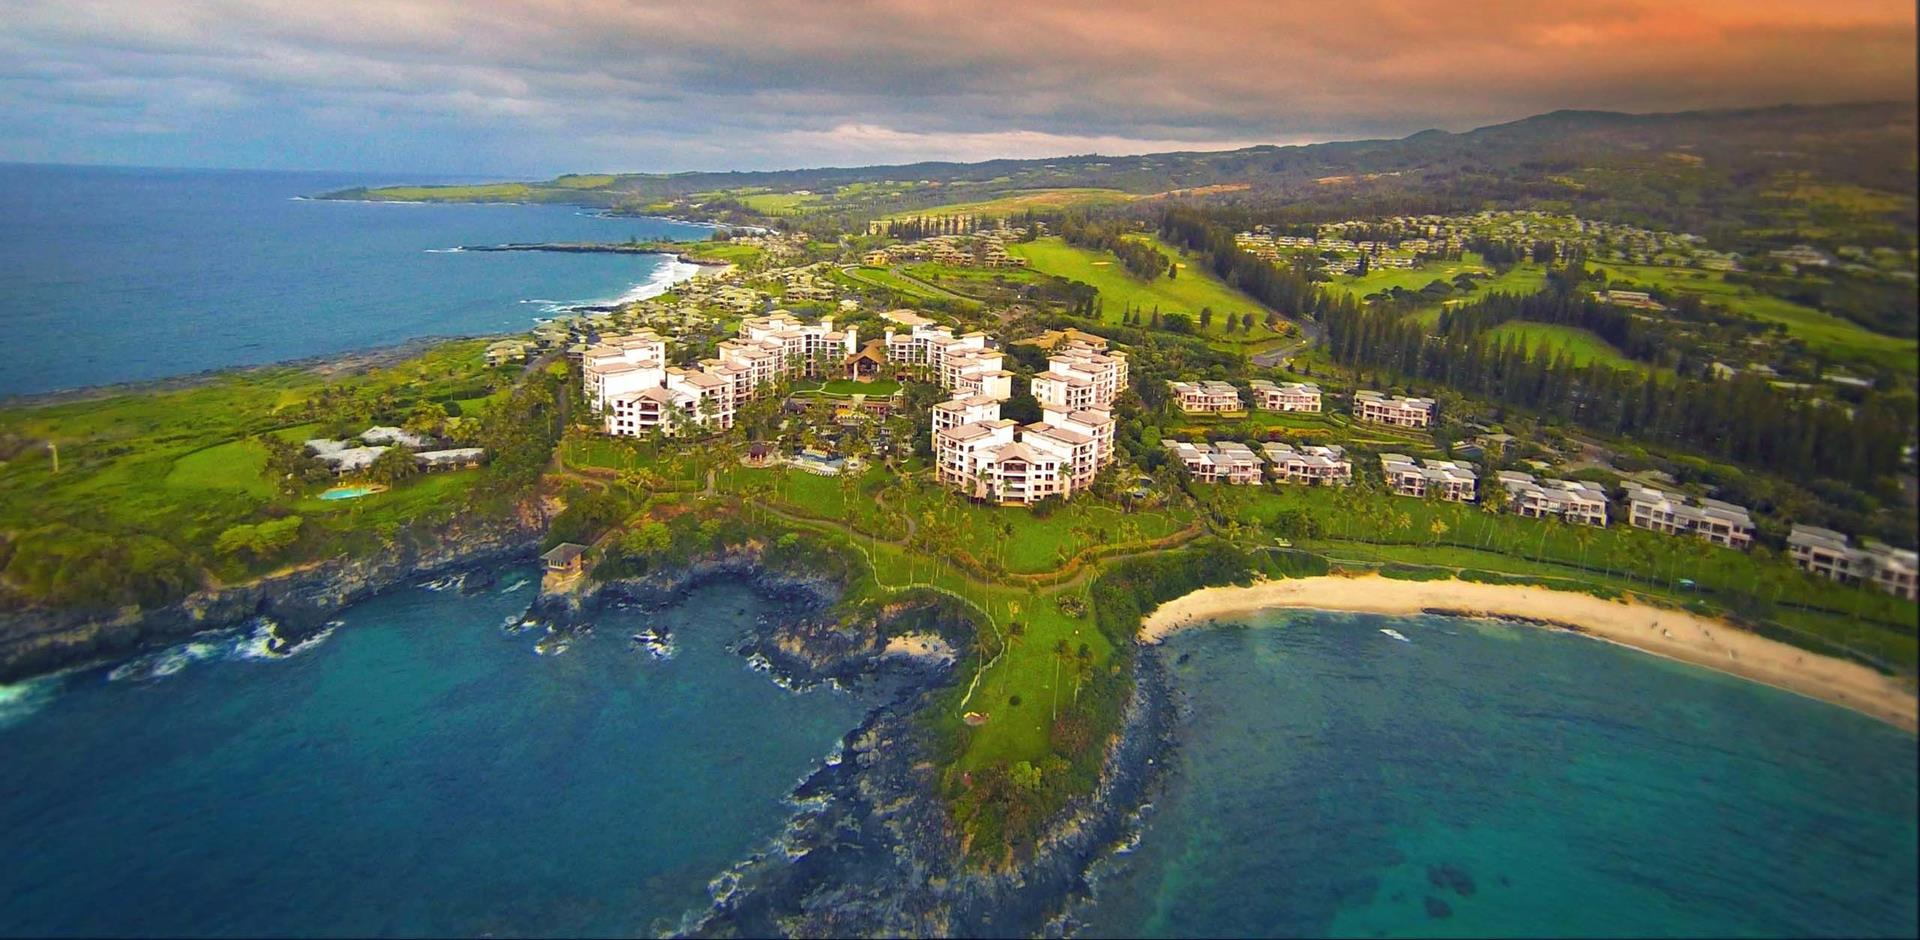 Aerial view of Montage Kapalua Bay Resort, Maui, Hawaii, USA